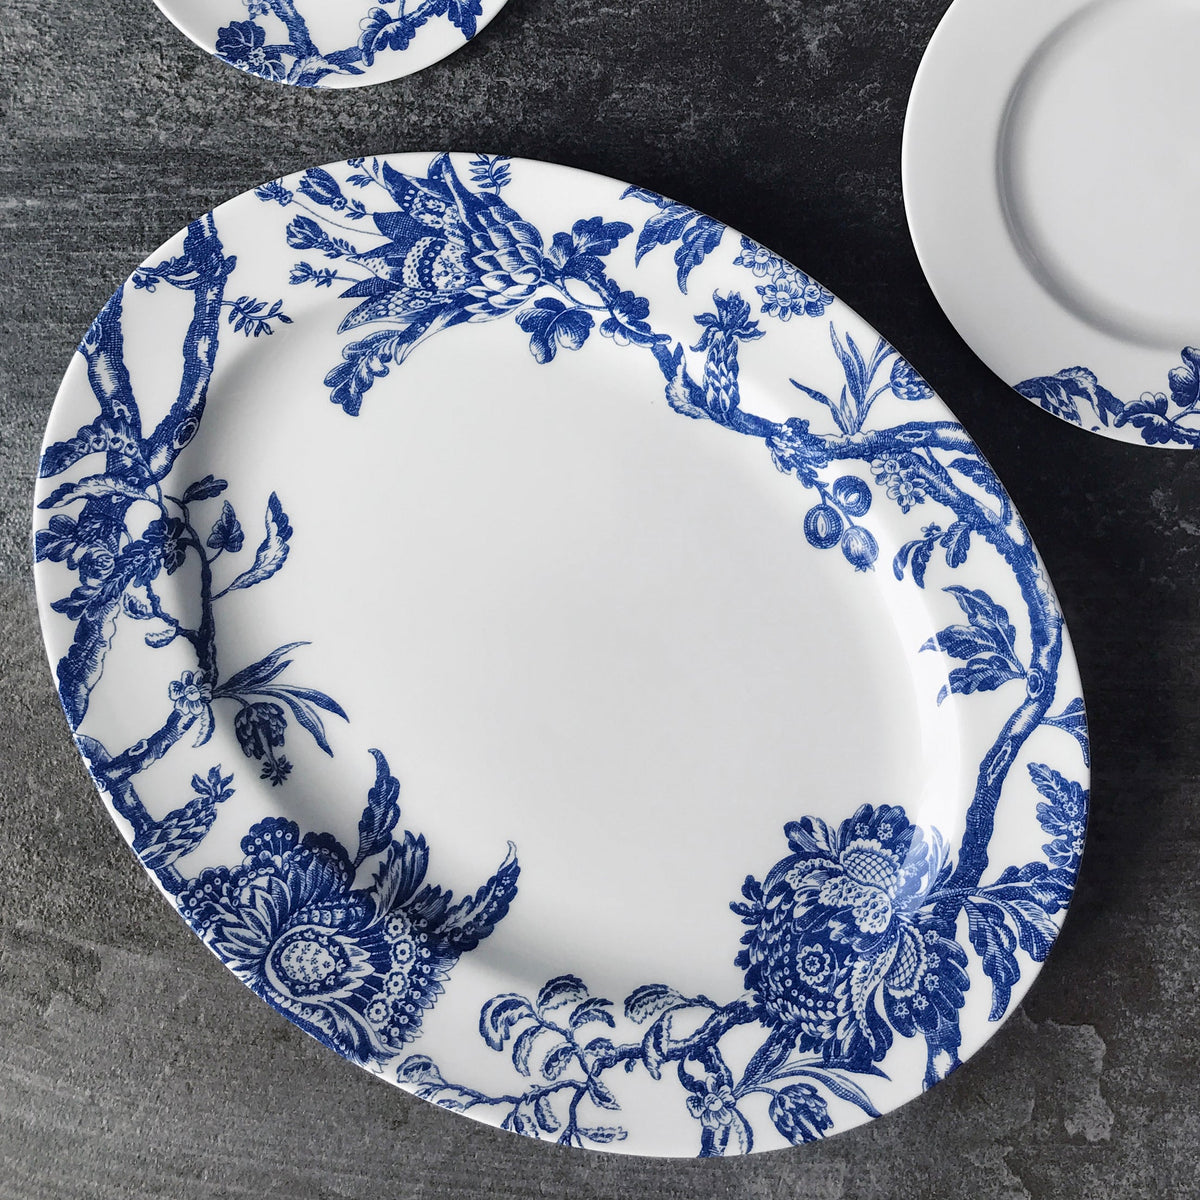 The blue and white porcelain Arcadia Large Oval Rimmed Platter - Caskata